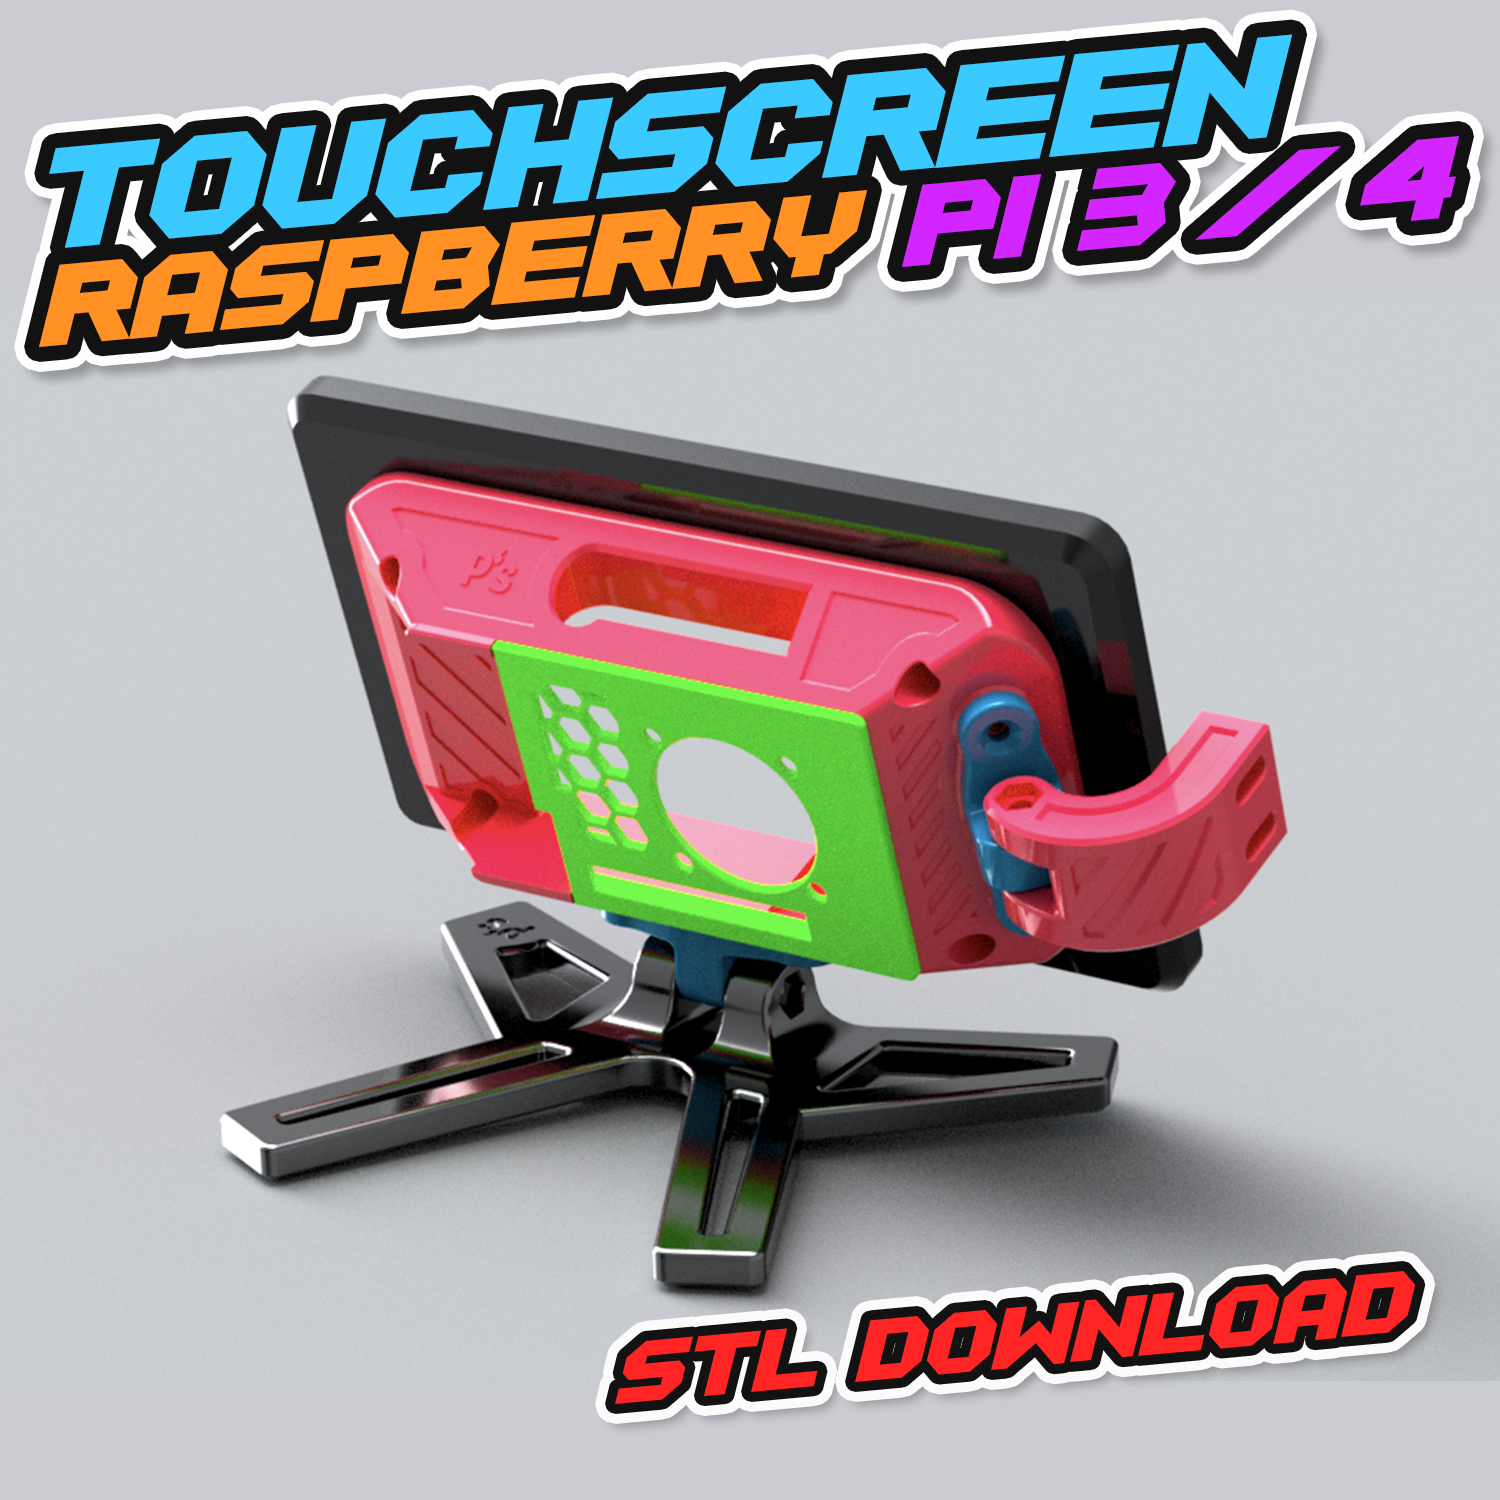 Touchscreen Raspberry Pi 3 / 4 Halter (STL Downloads)